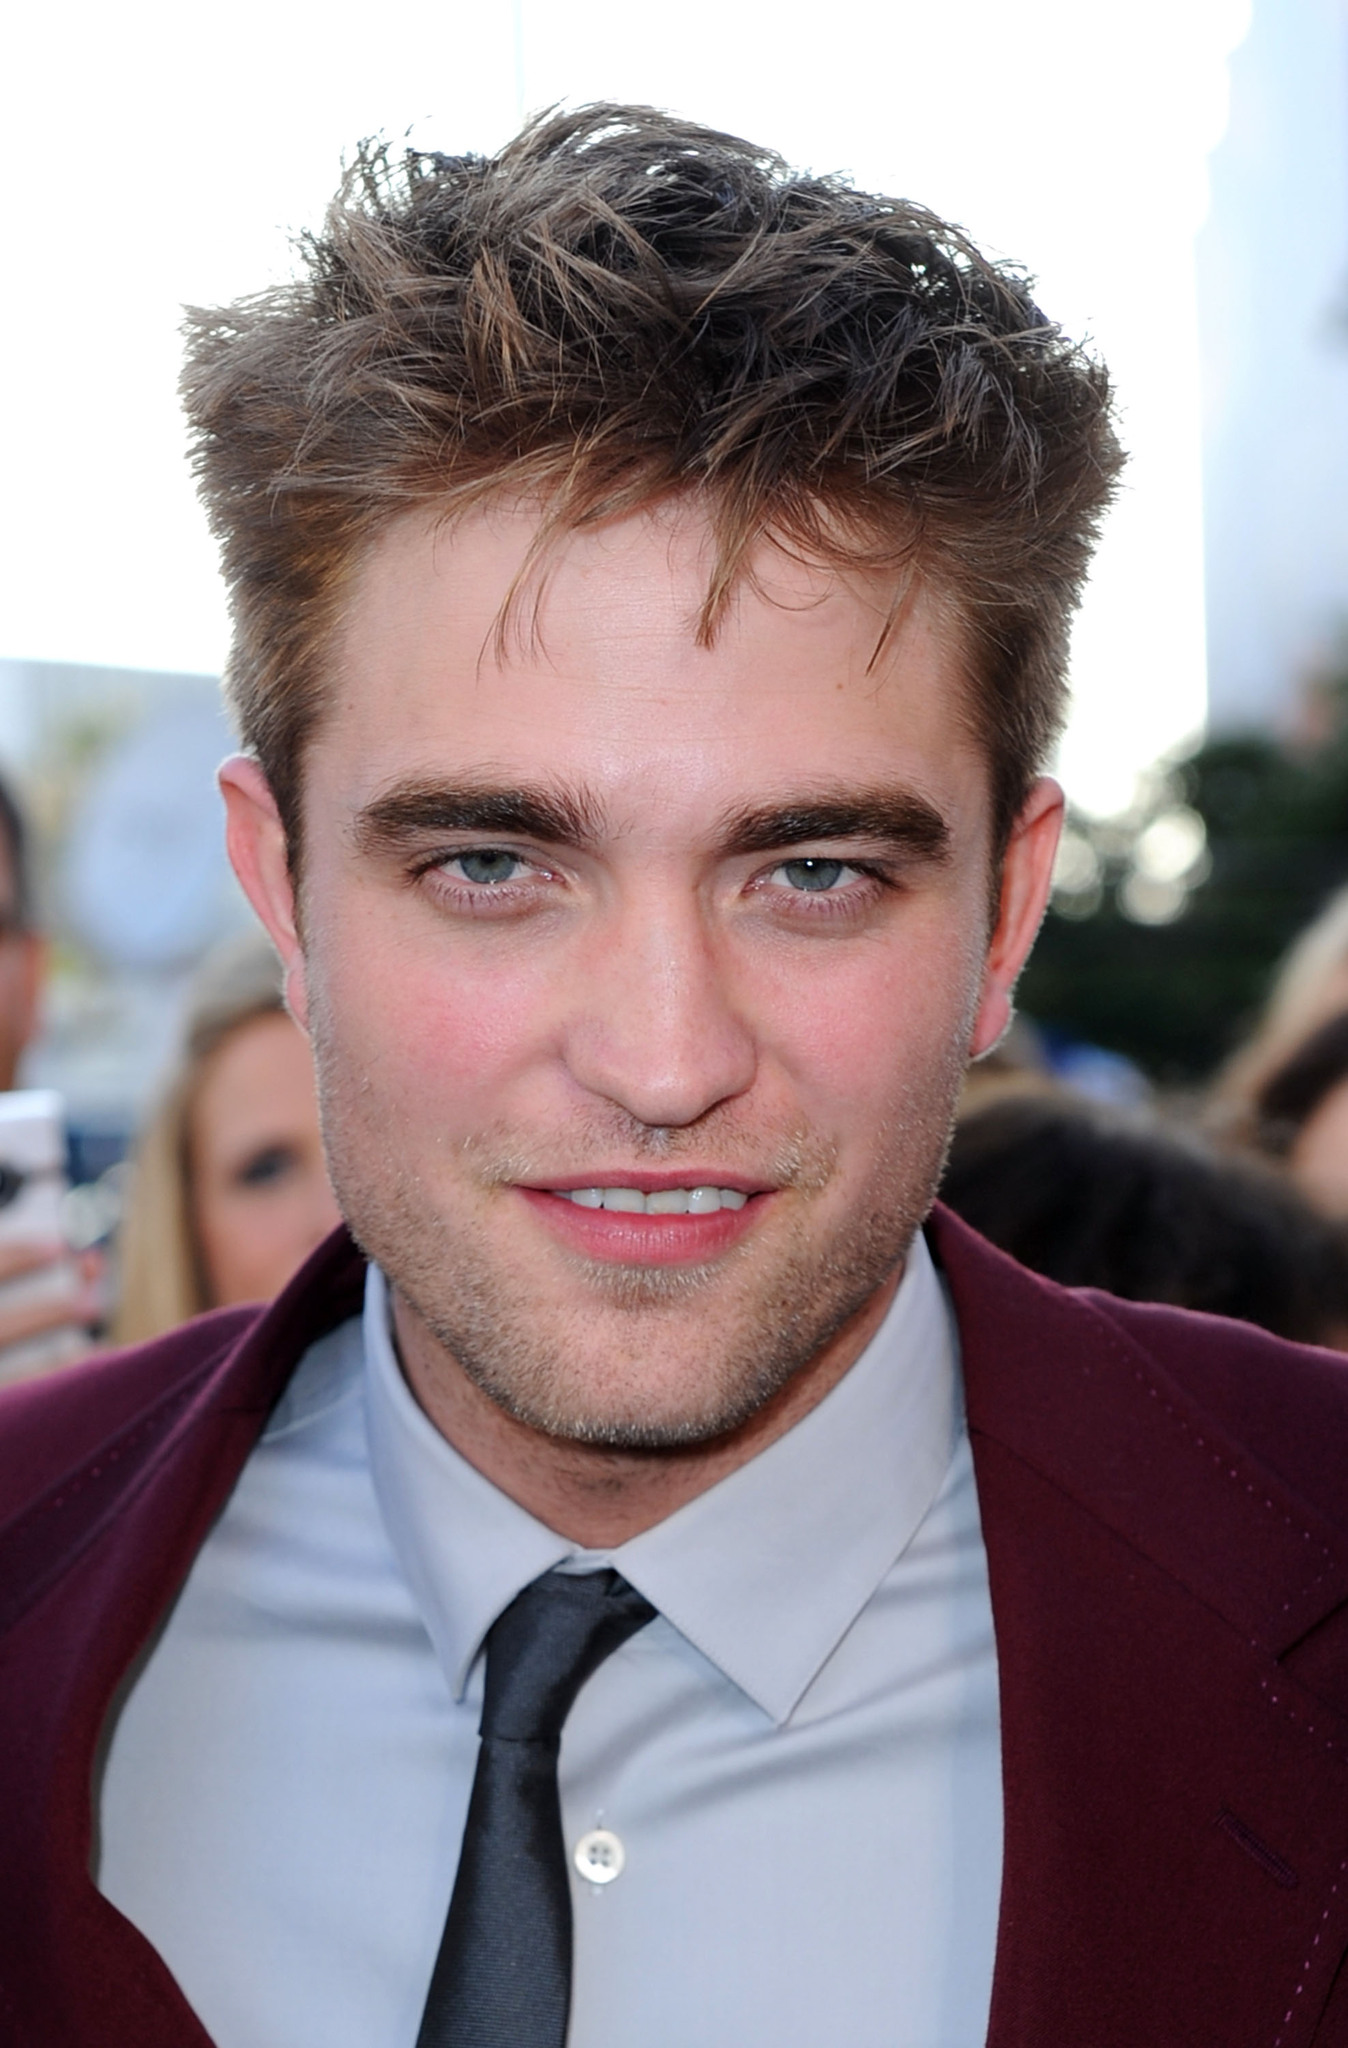 Robert Pattinson at event of The Twilight Saga: Eclipse (2010)